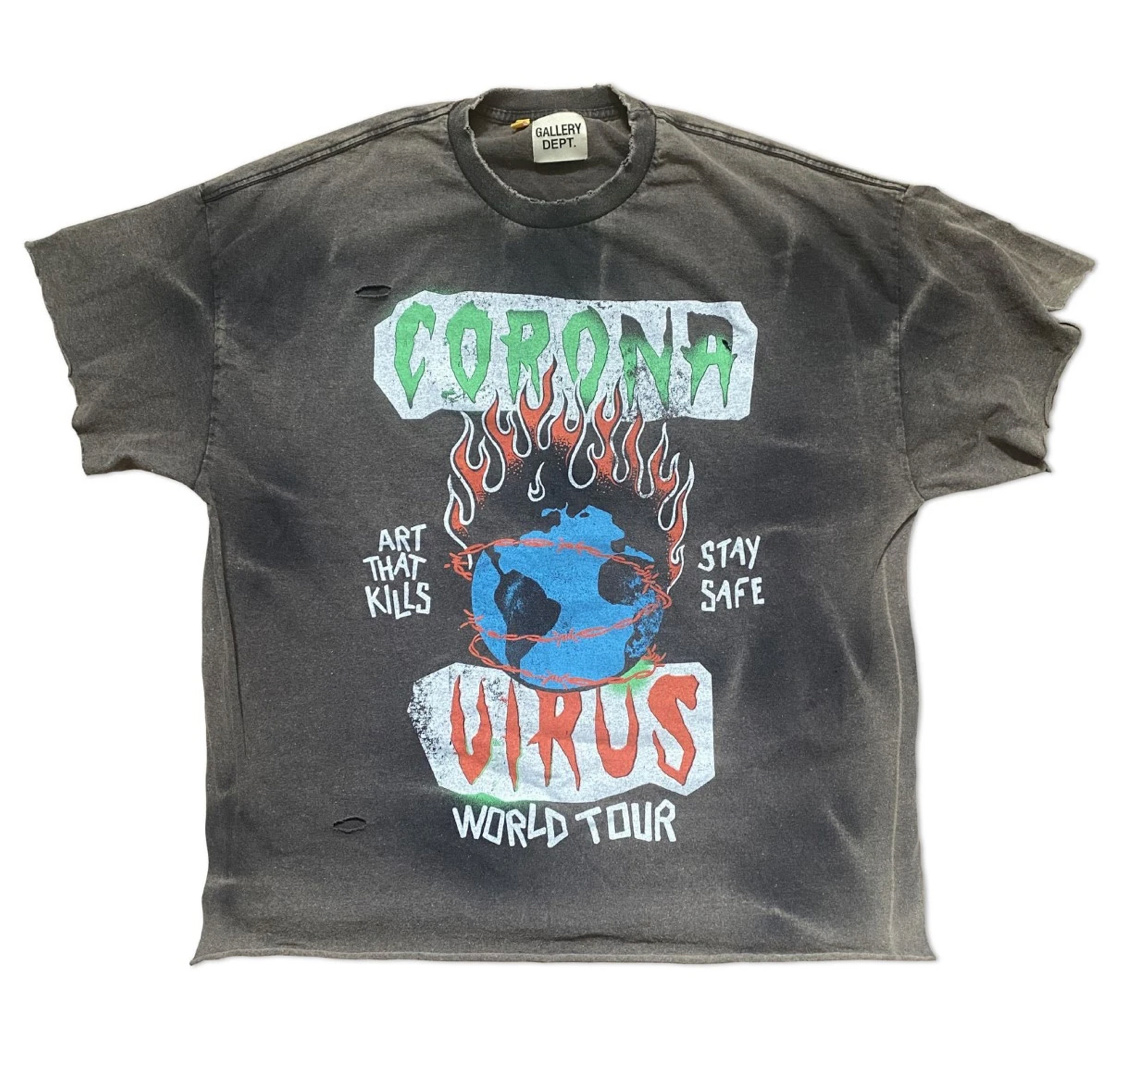 Gallery Dept. ATK Corona Tour T-shirt Black Men's - US